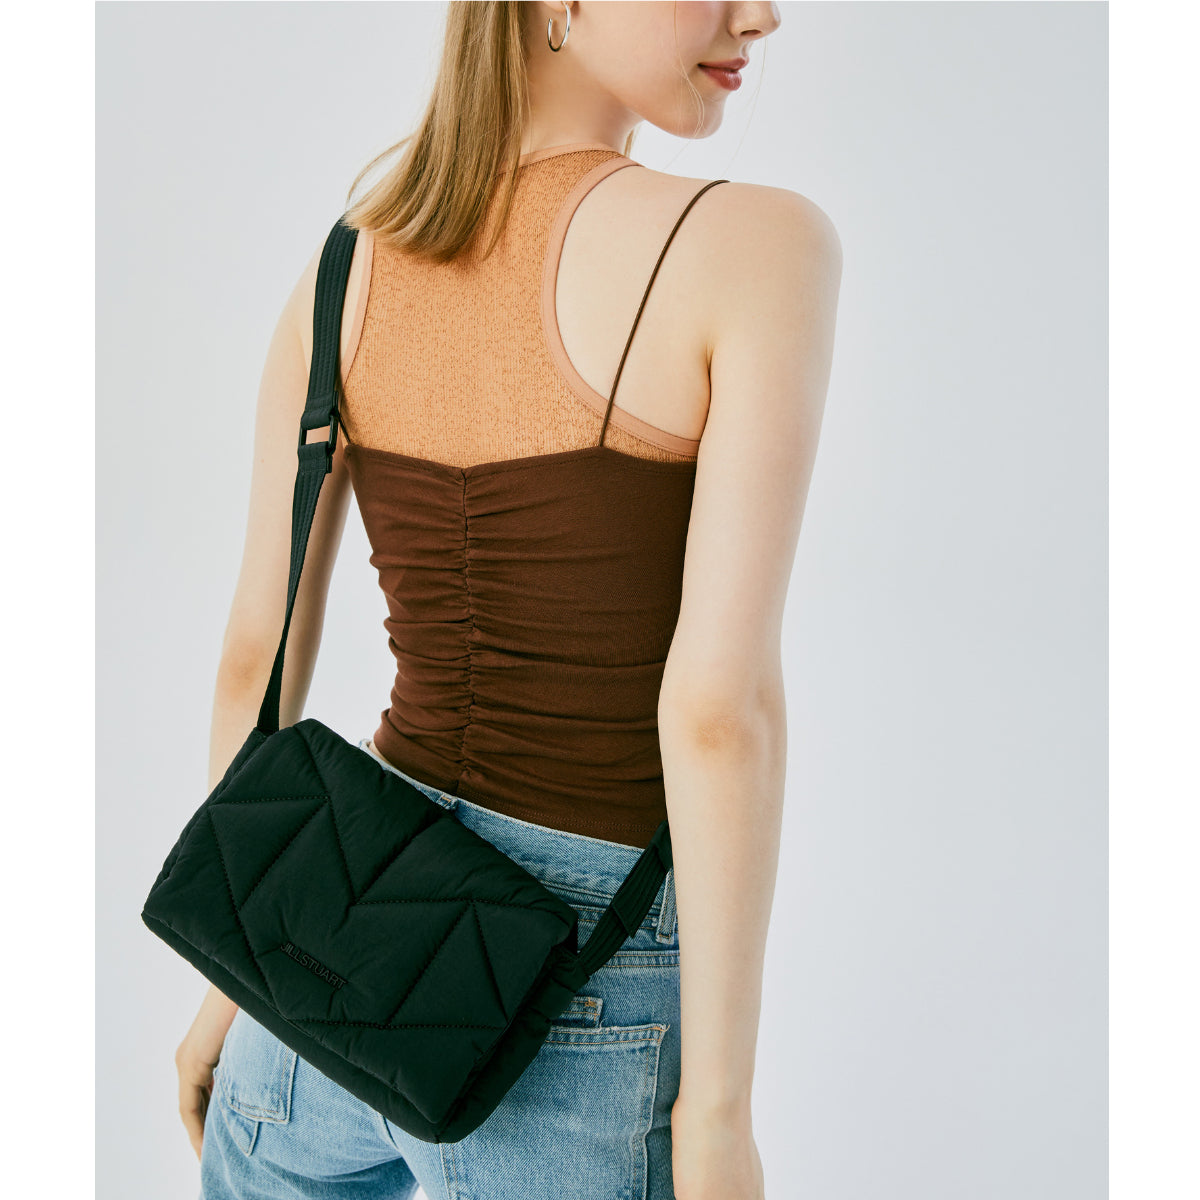 JILLSTUART Rosella Padding Black Small Shoulder Crossbody Bag Lightweight nylon fabric material/ from Seoul, Korea